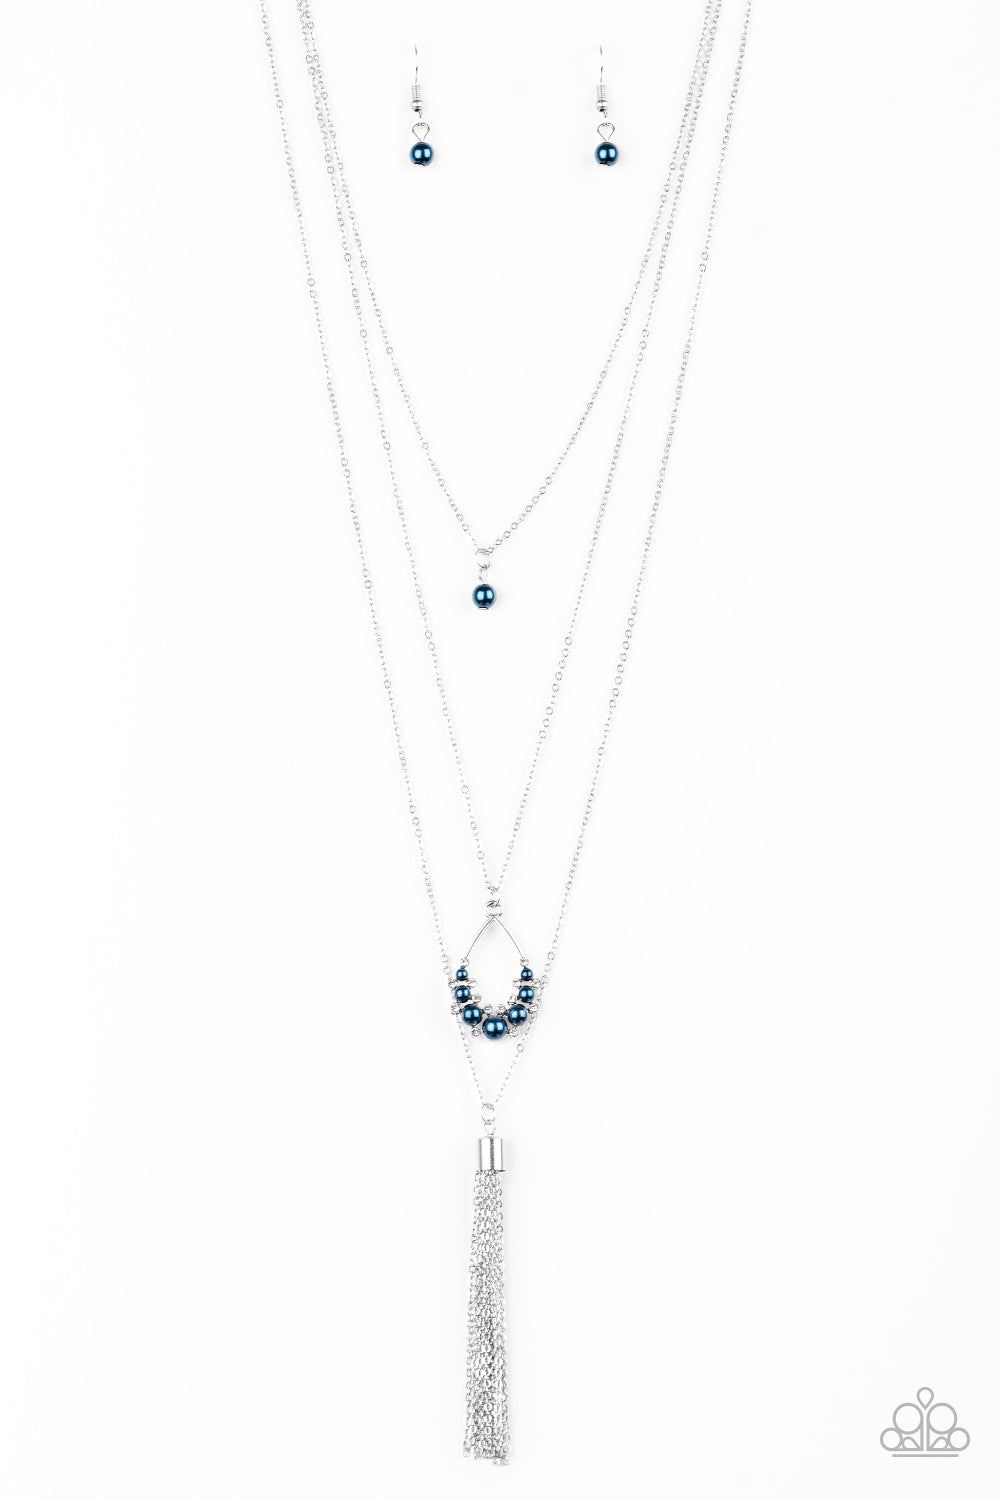 Paparazzi Necklace ~ Be Fancy - Blue Necklace